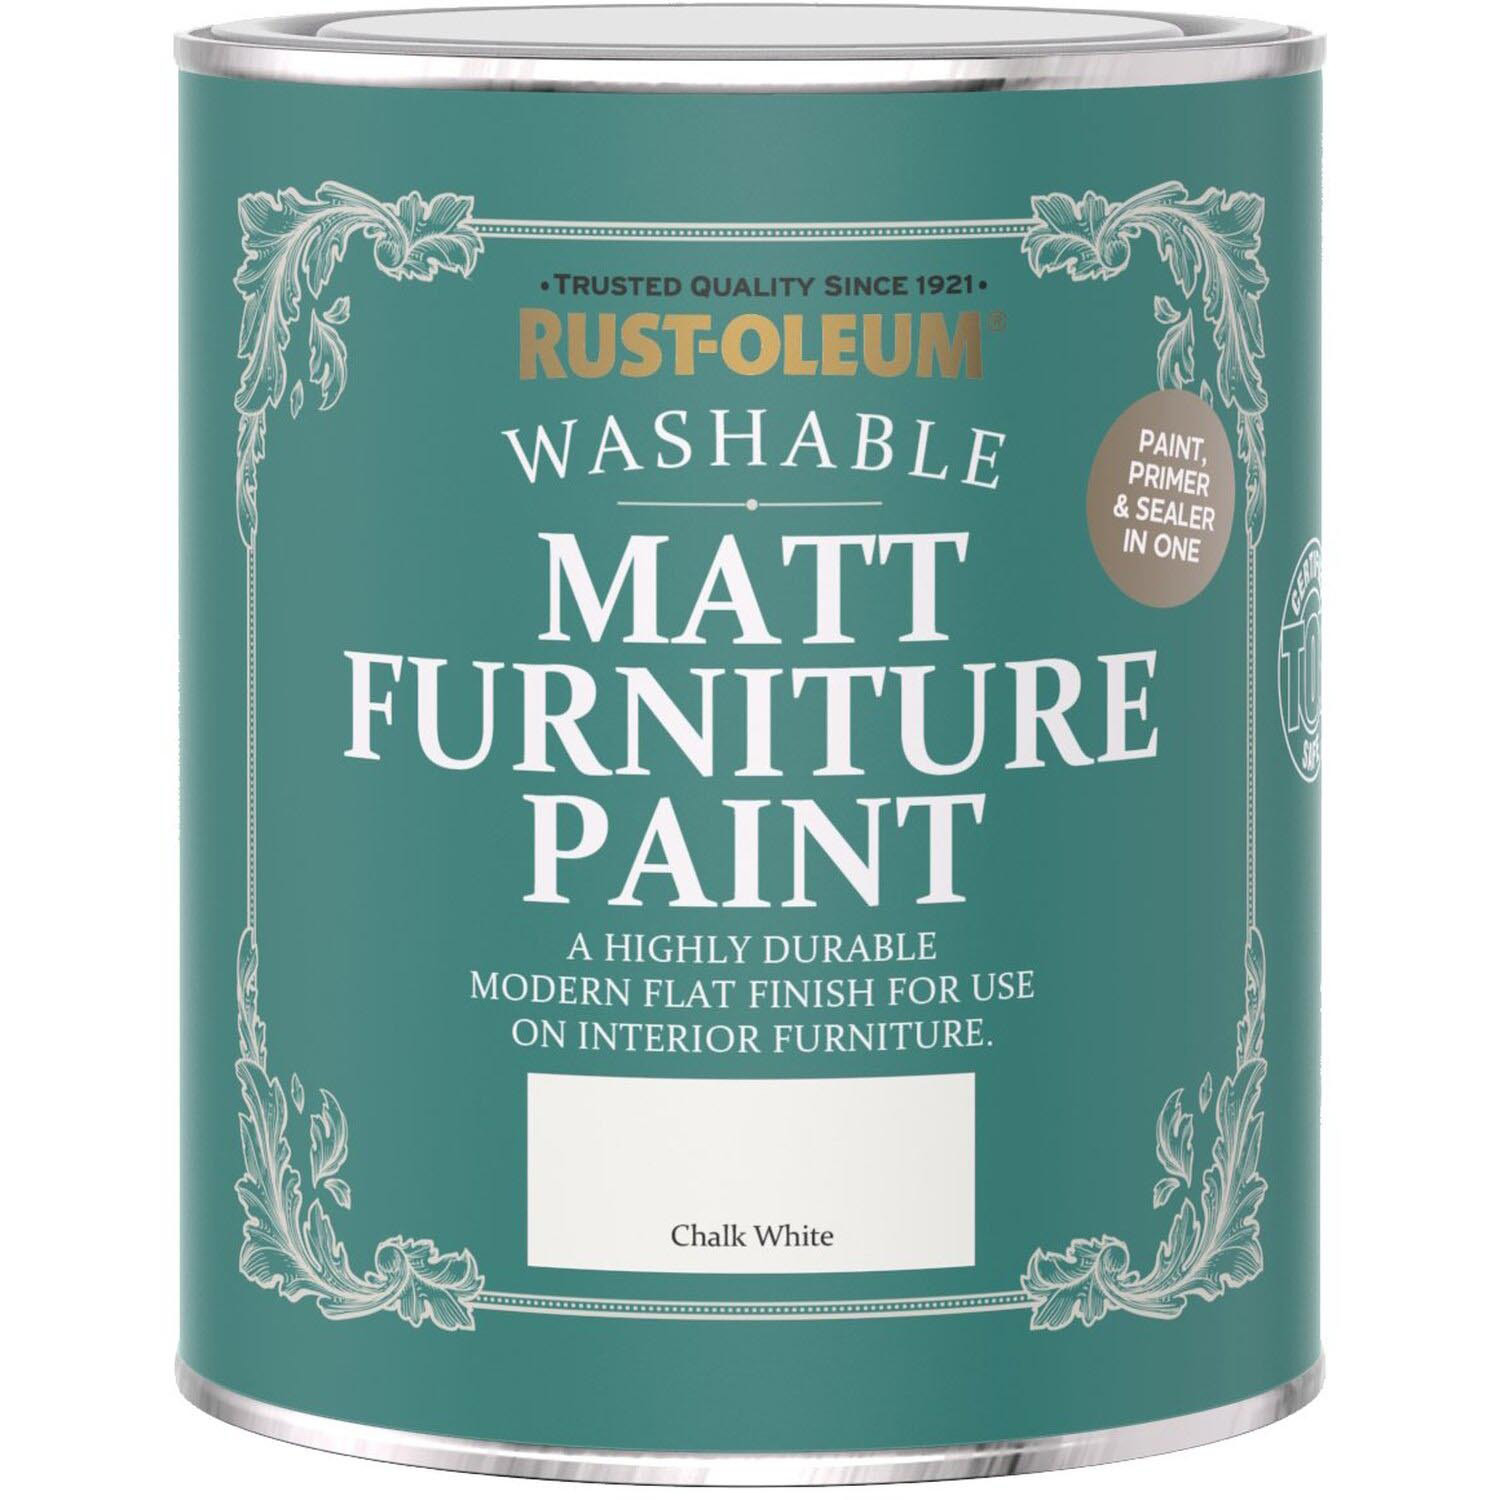 Rust-Oleum Chalk White Matt Furniture Paint 750ml Image 2